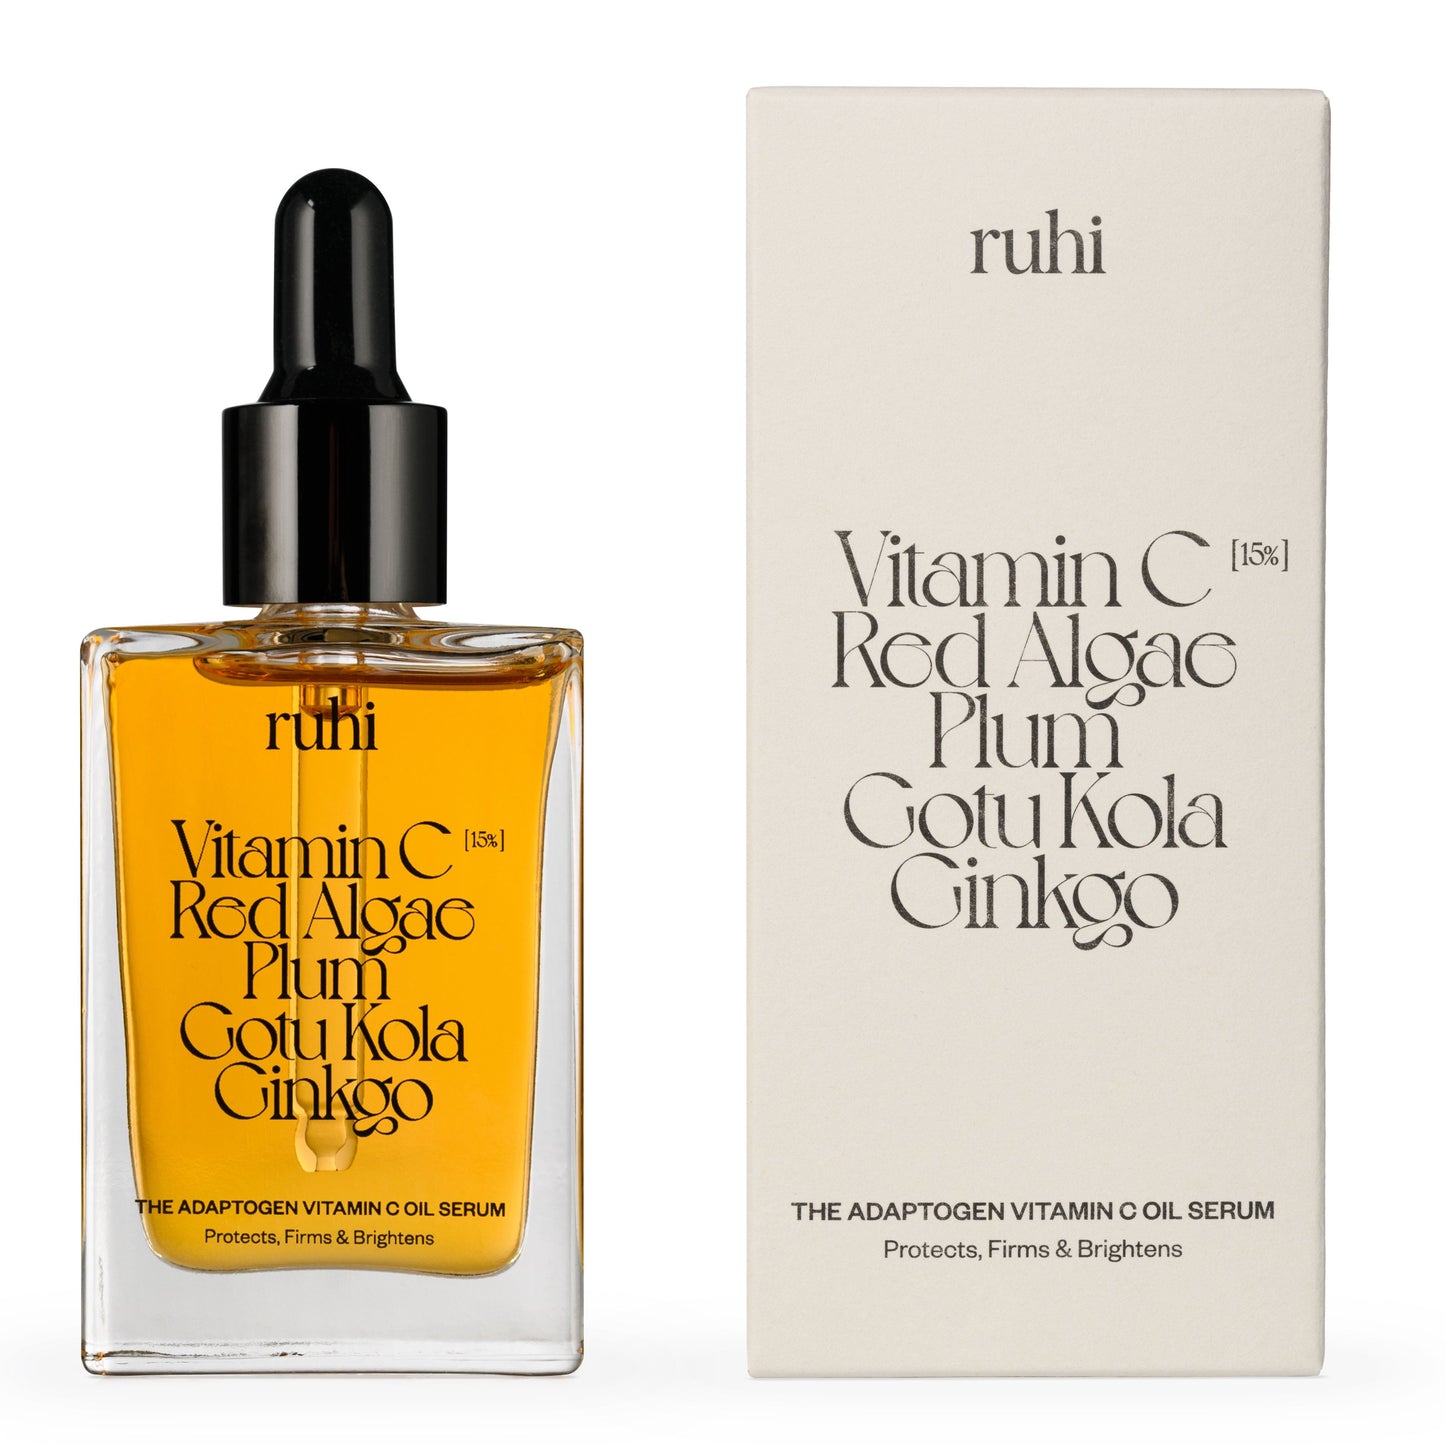 ruhi - the Adaptogen Vitamin C Oil Serum 30 ml